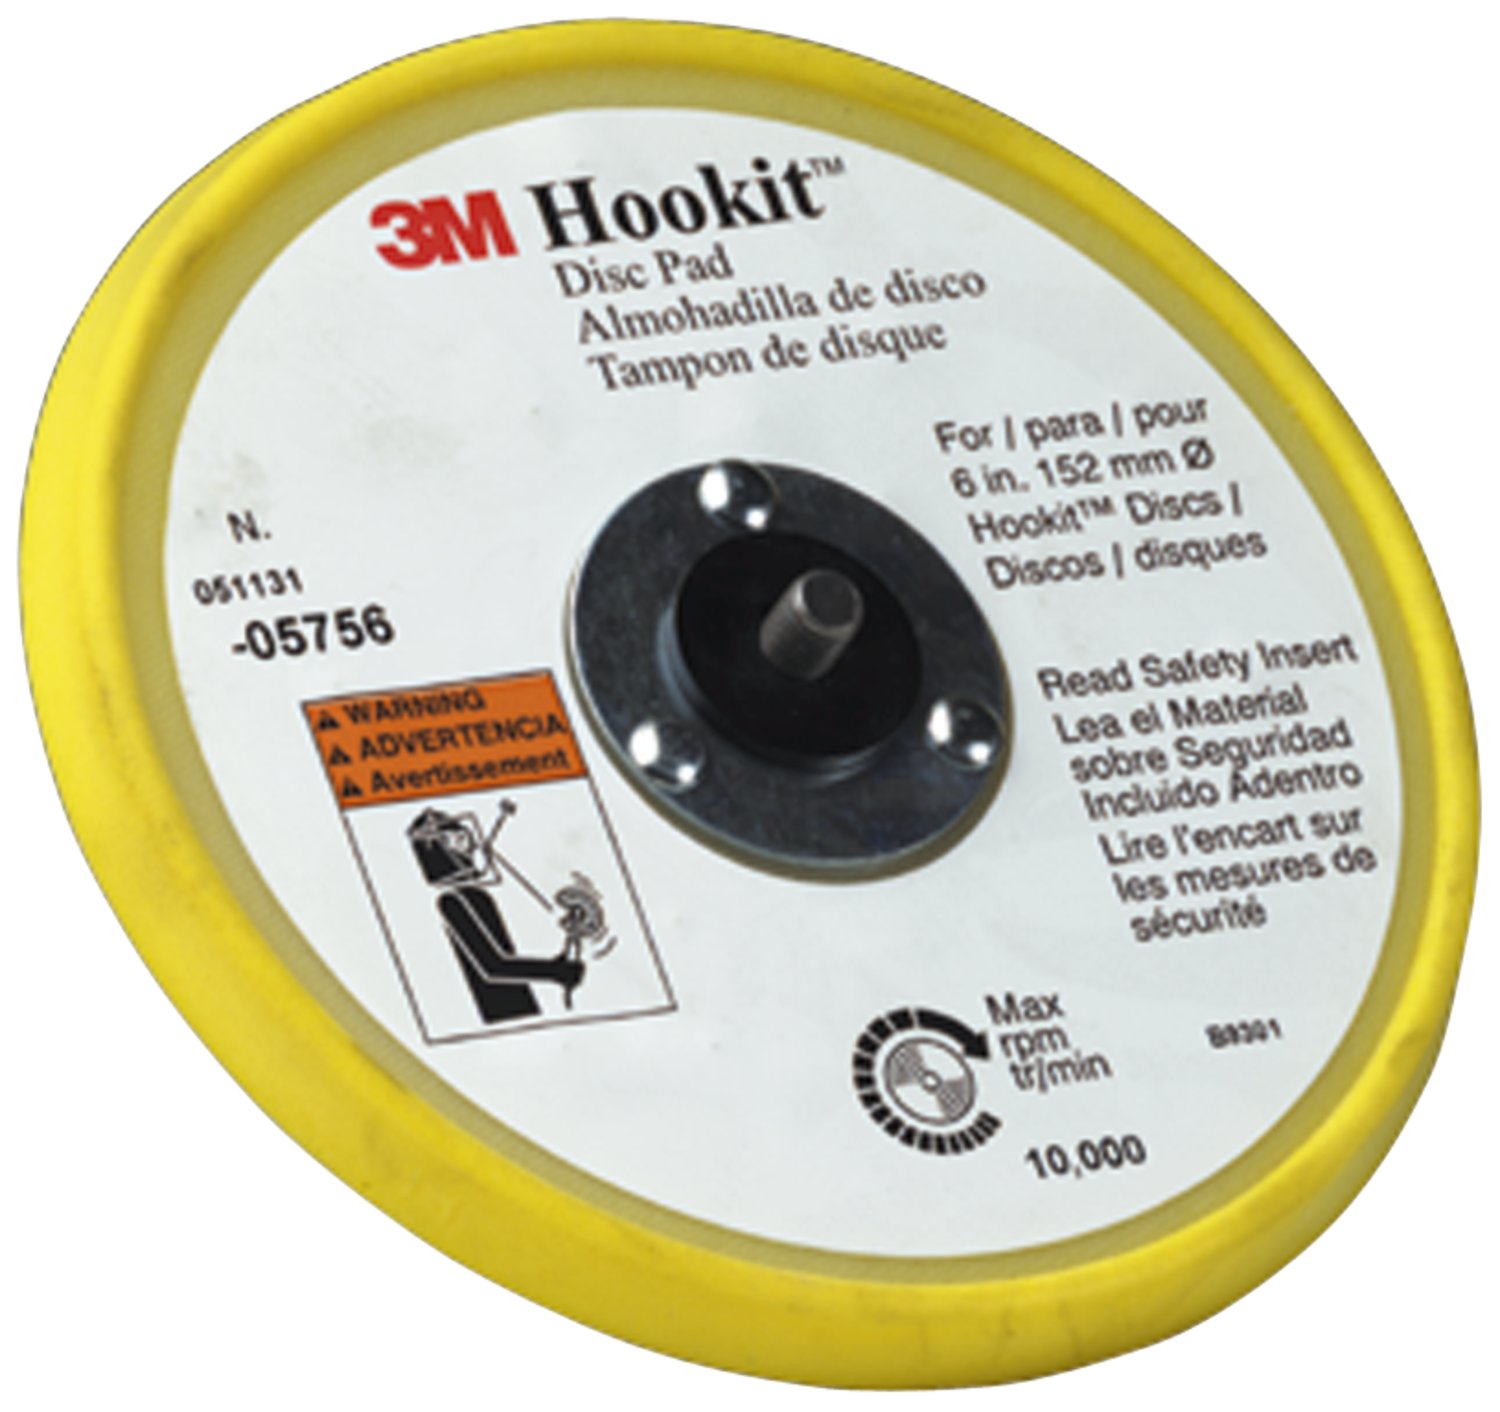 7000120066 - 3M Hookit Low Profile Disc Pad, 05756, 6 Inch, 10 per case